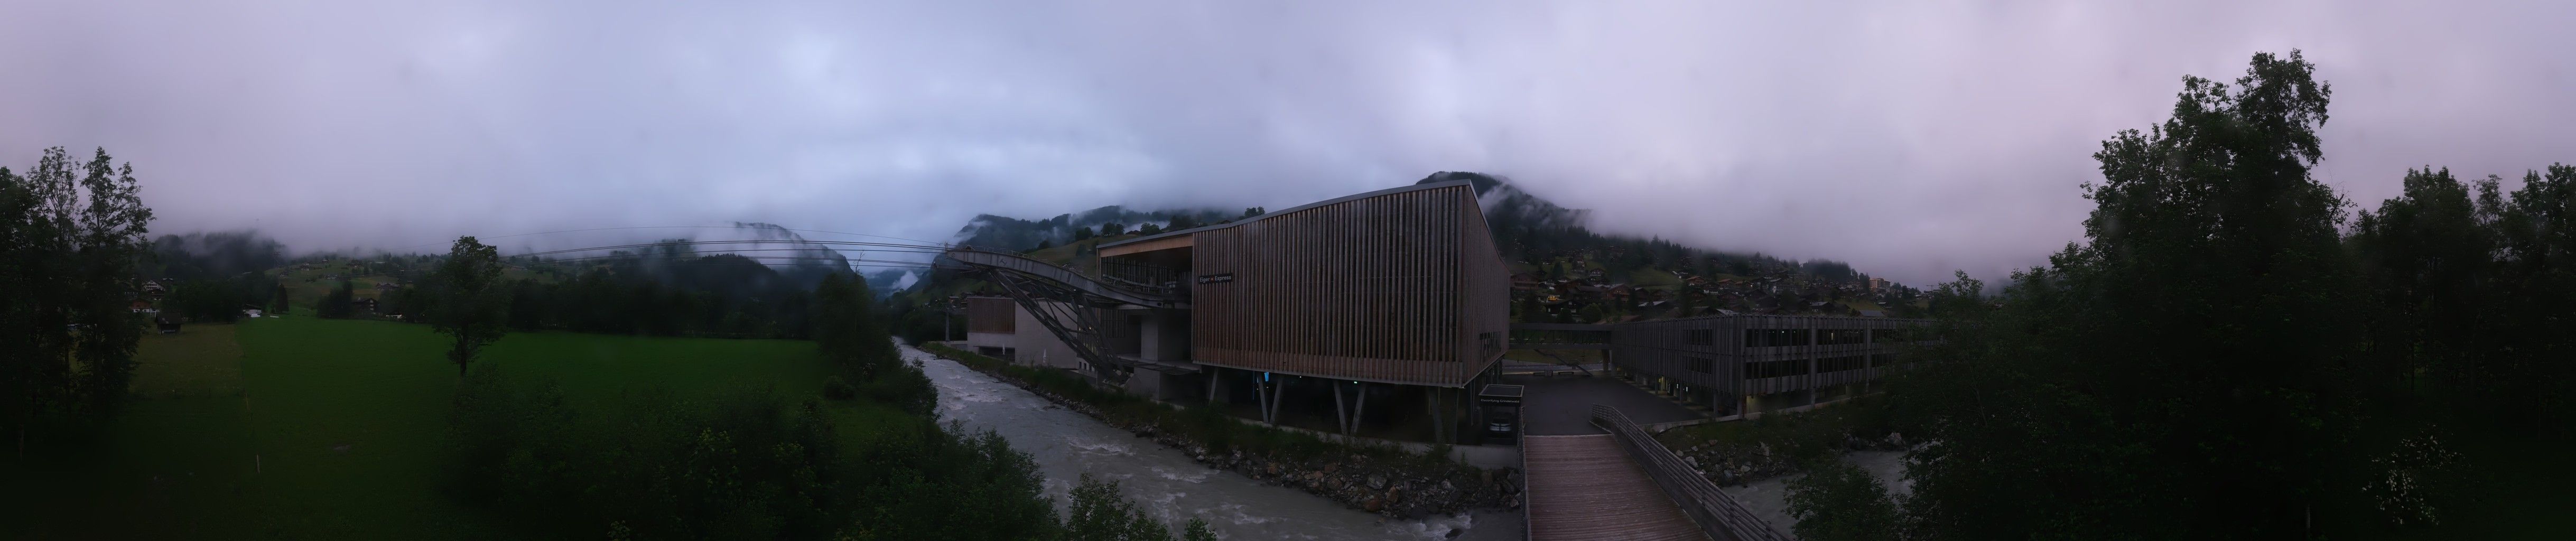 Grindelwald: Terminal